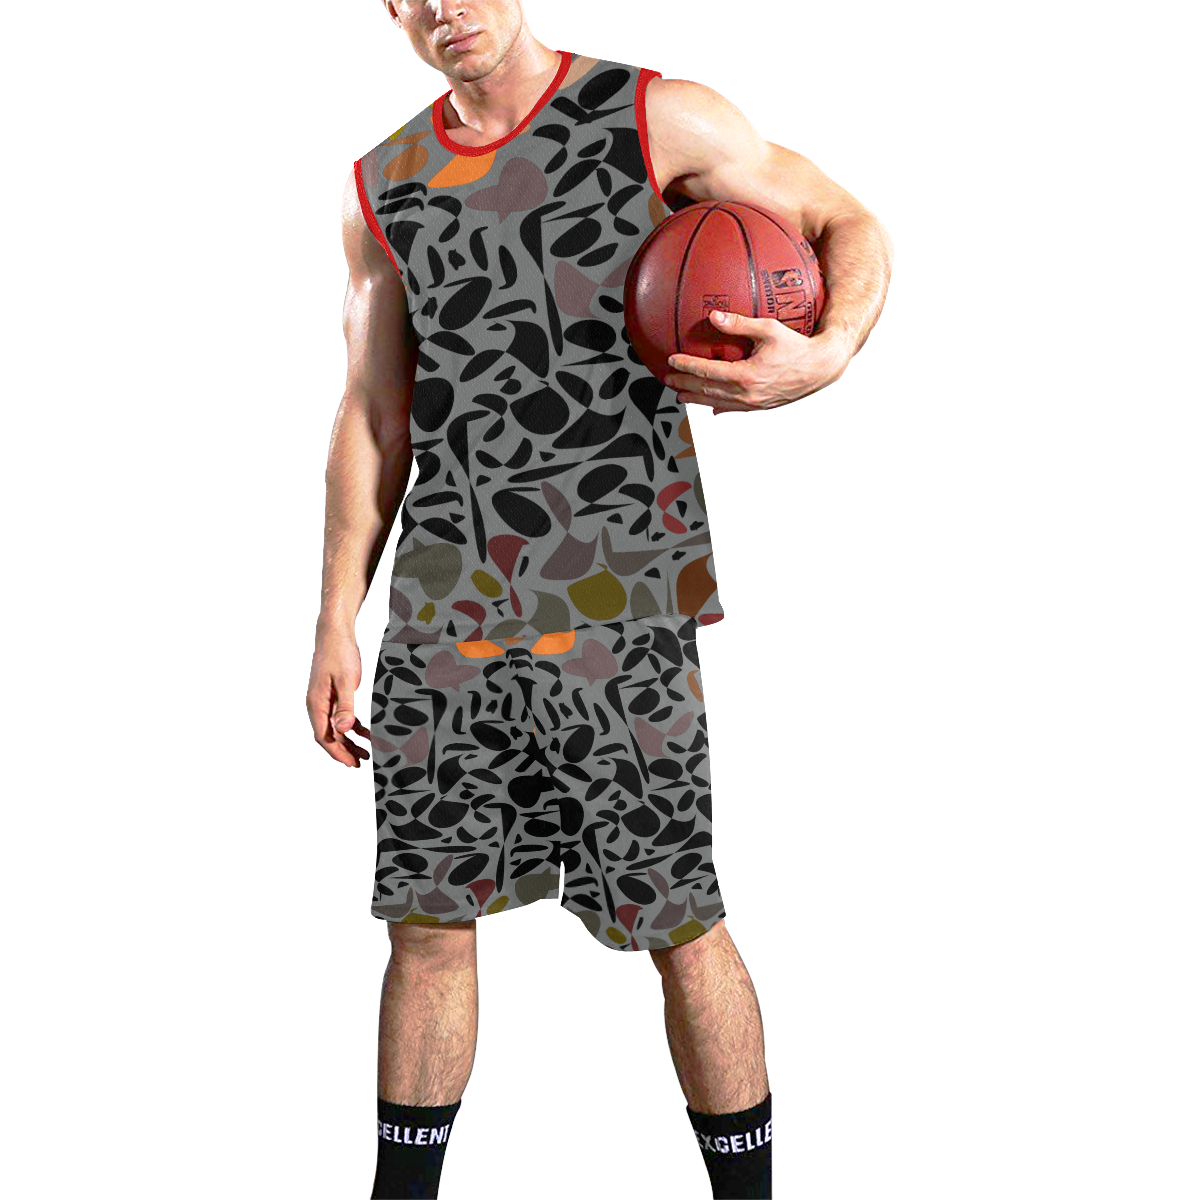 zappwaits Z7 All Over Print Basketball Uniform